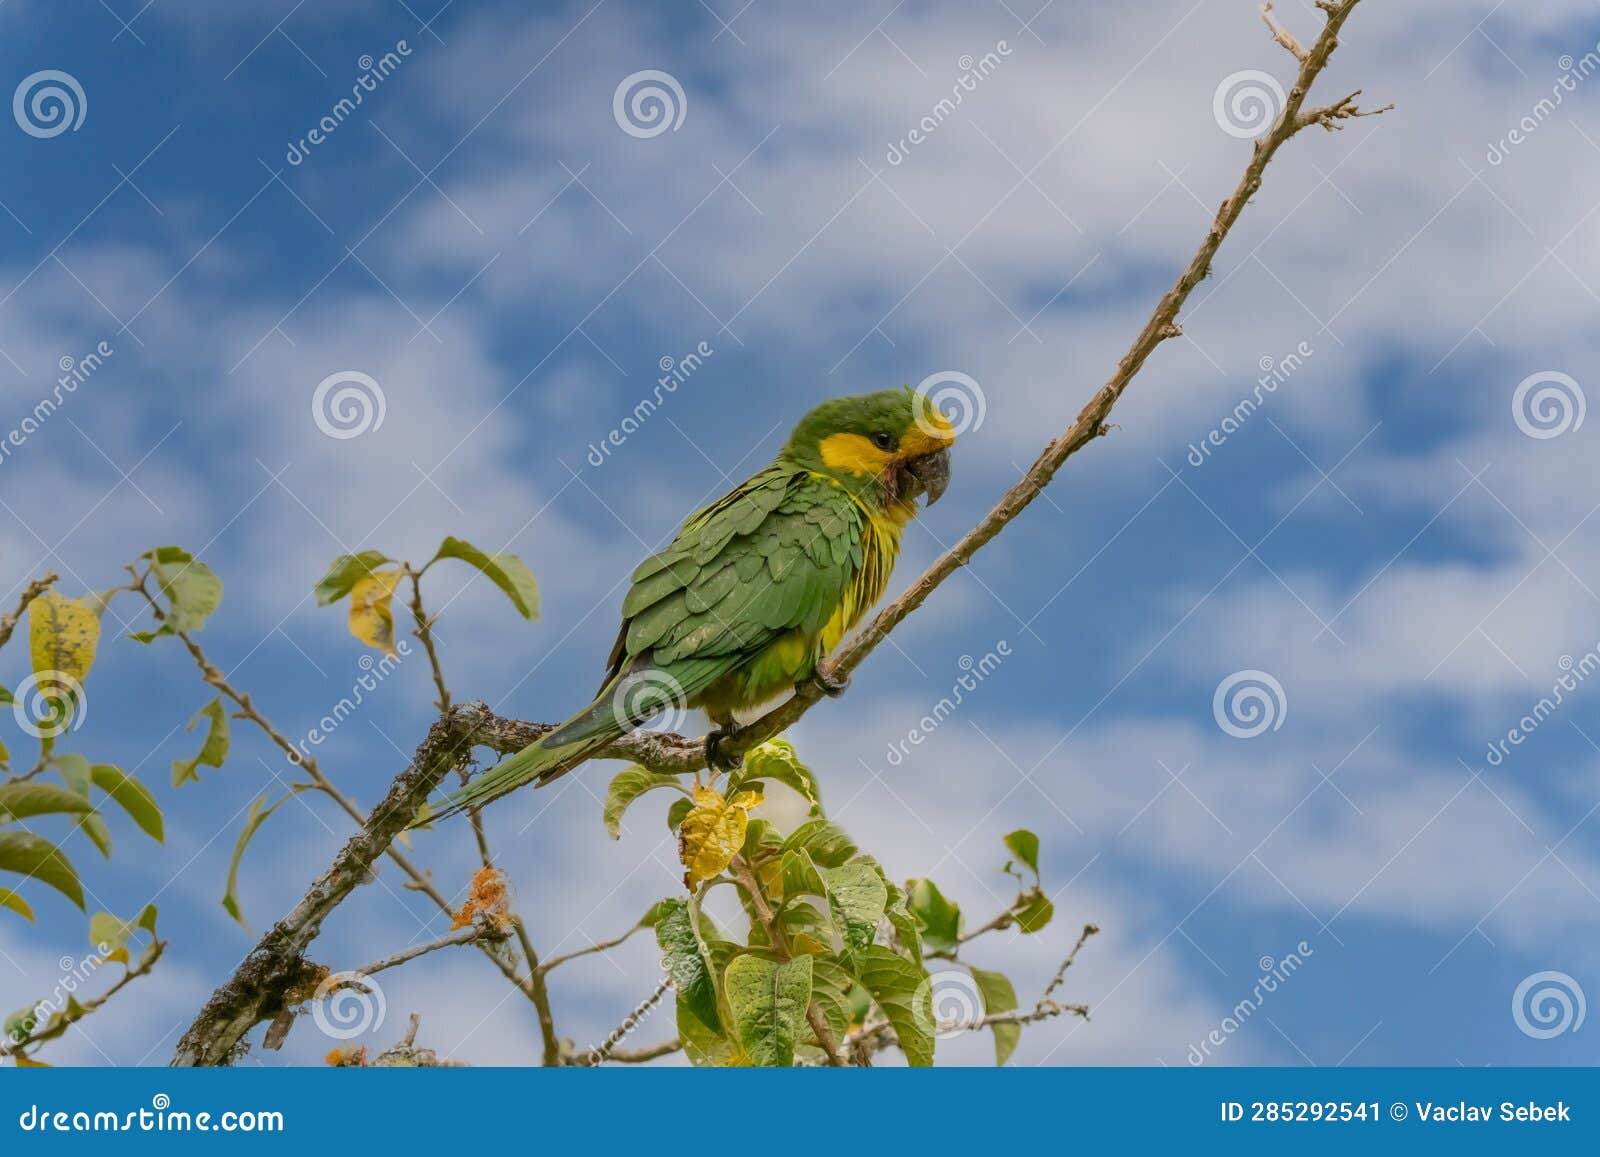 loro orejiamarillo yellow-eared parrot